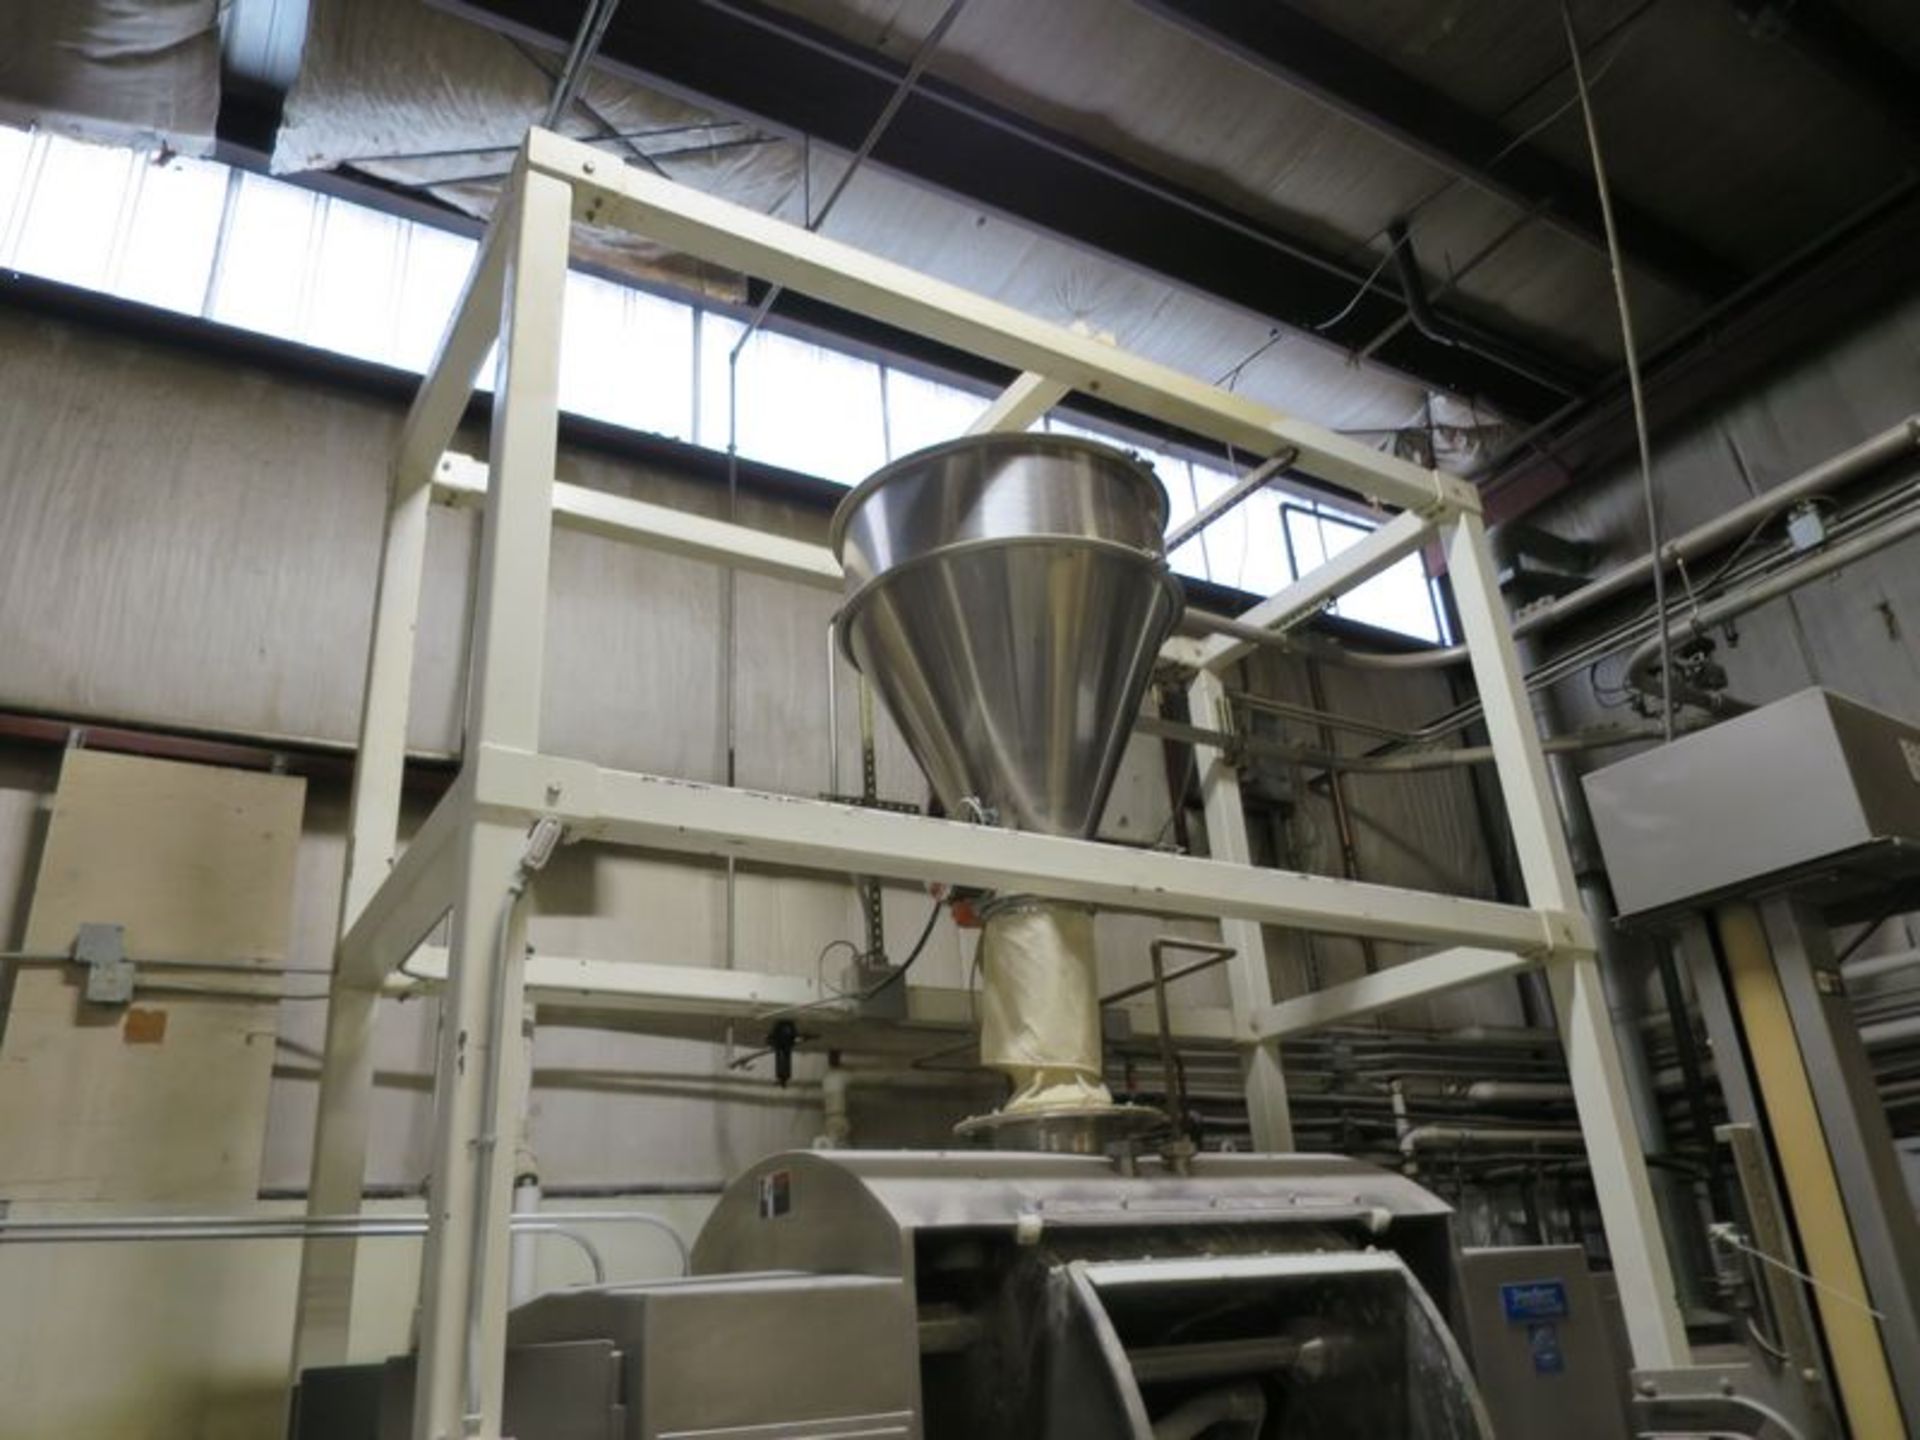 HB-Tecknik automatic flour dispensing system, installed in 2010, model HB-10 Automatik digital - Image 6 of 9